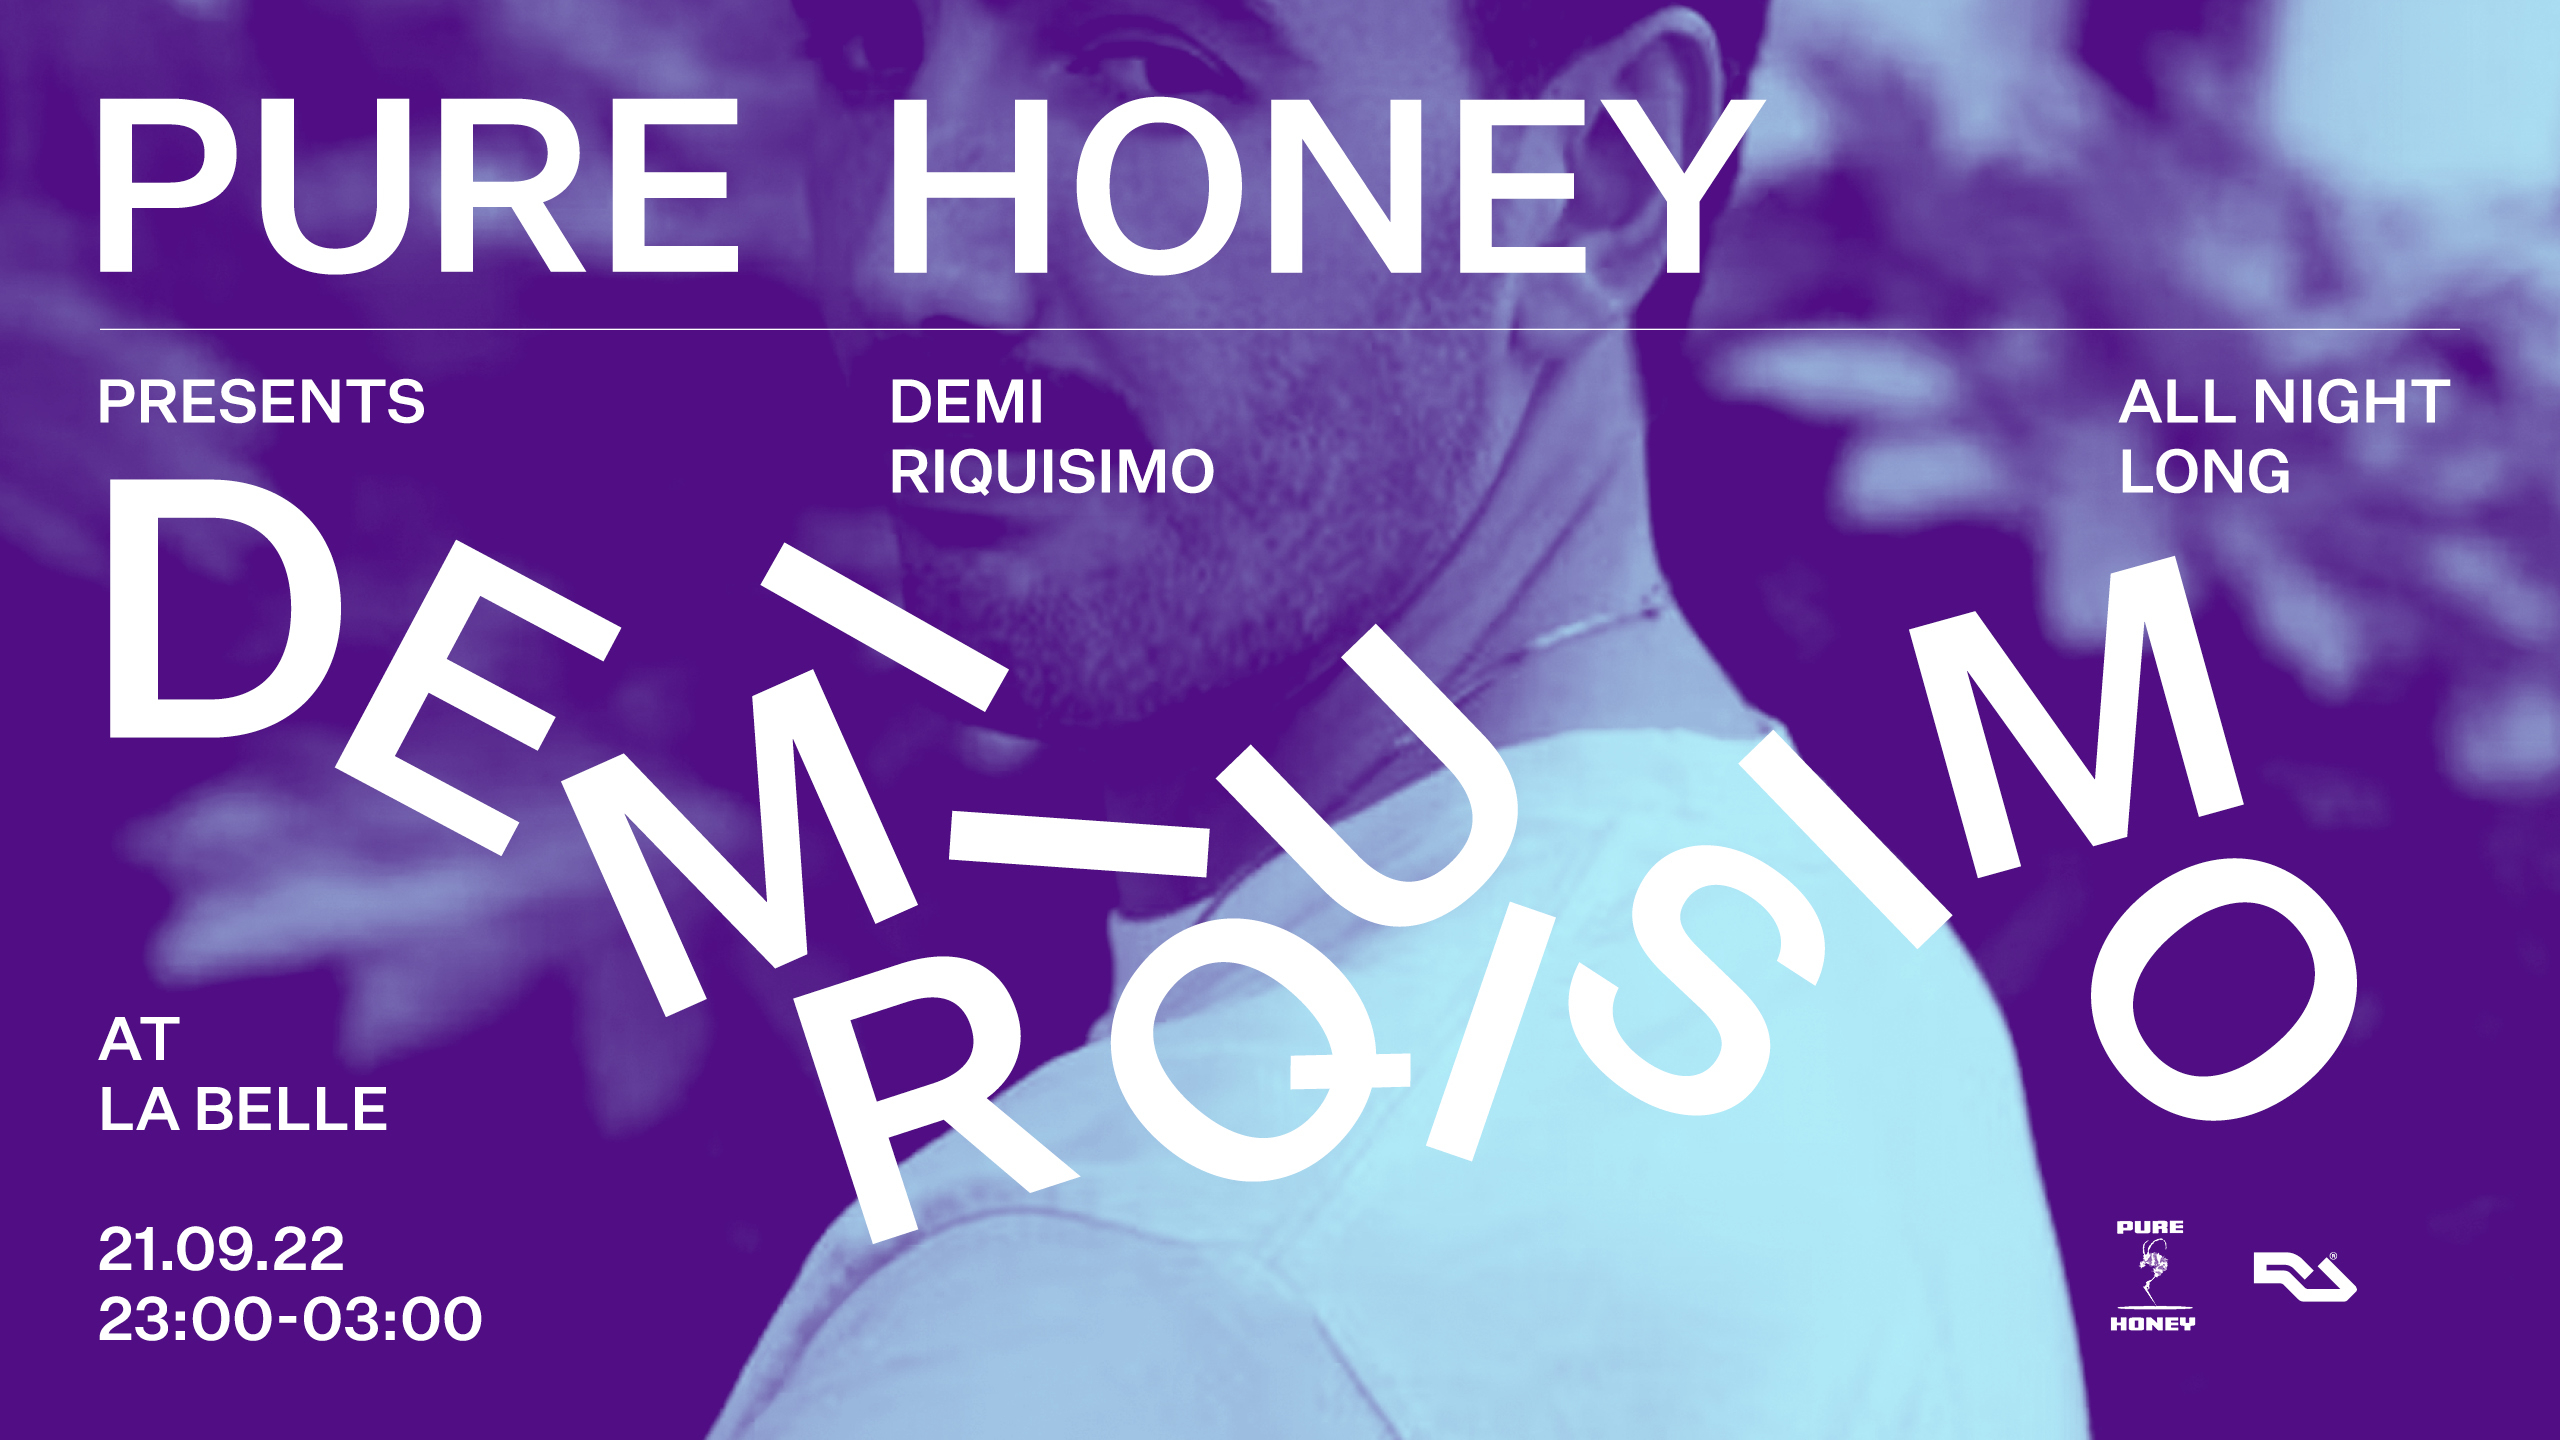 Pure Honey presents: Demi Riquisimo [All Night Long] - Flyer front